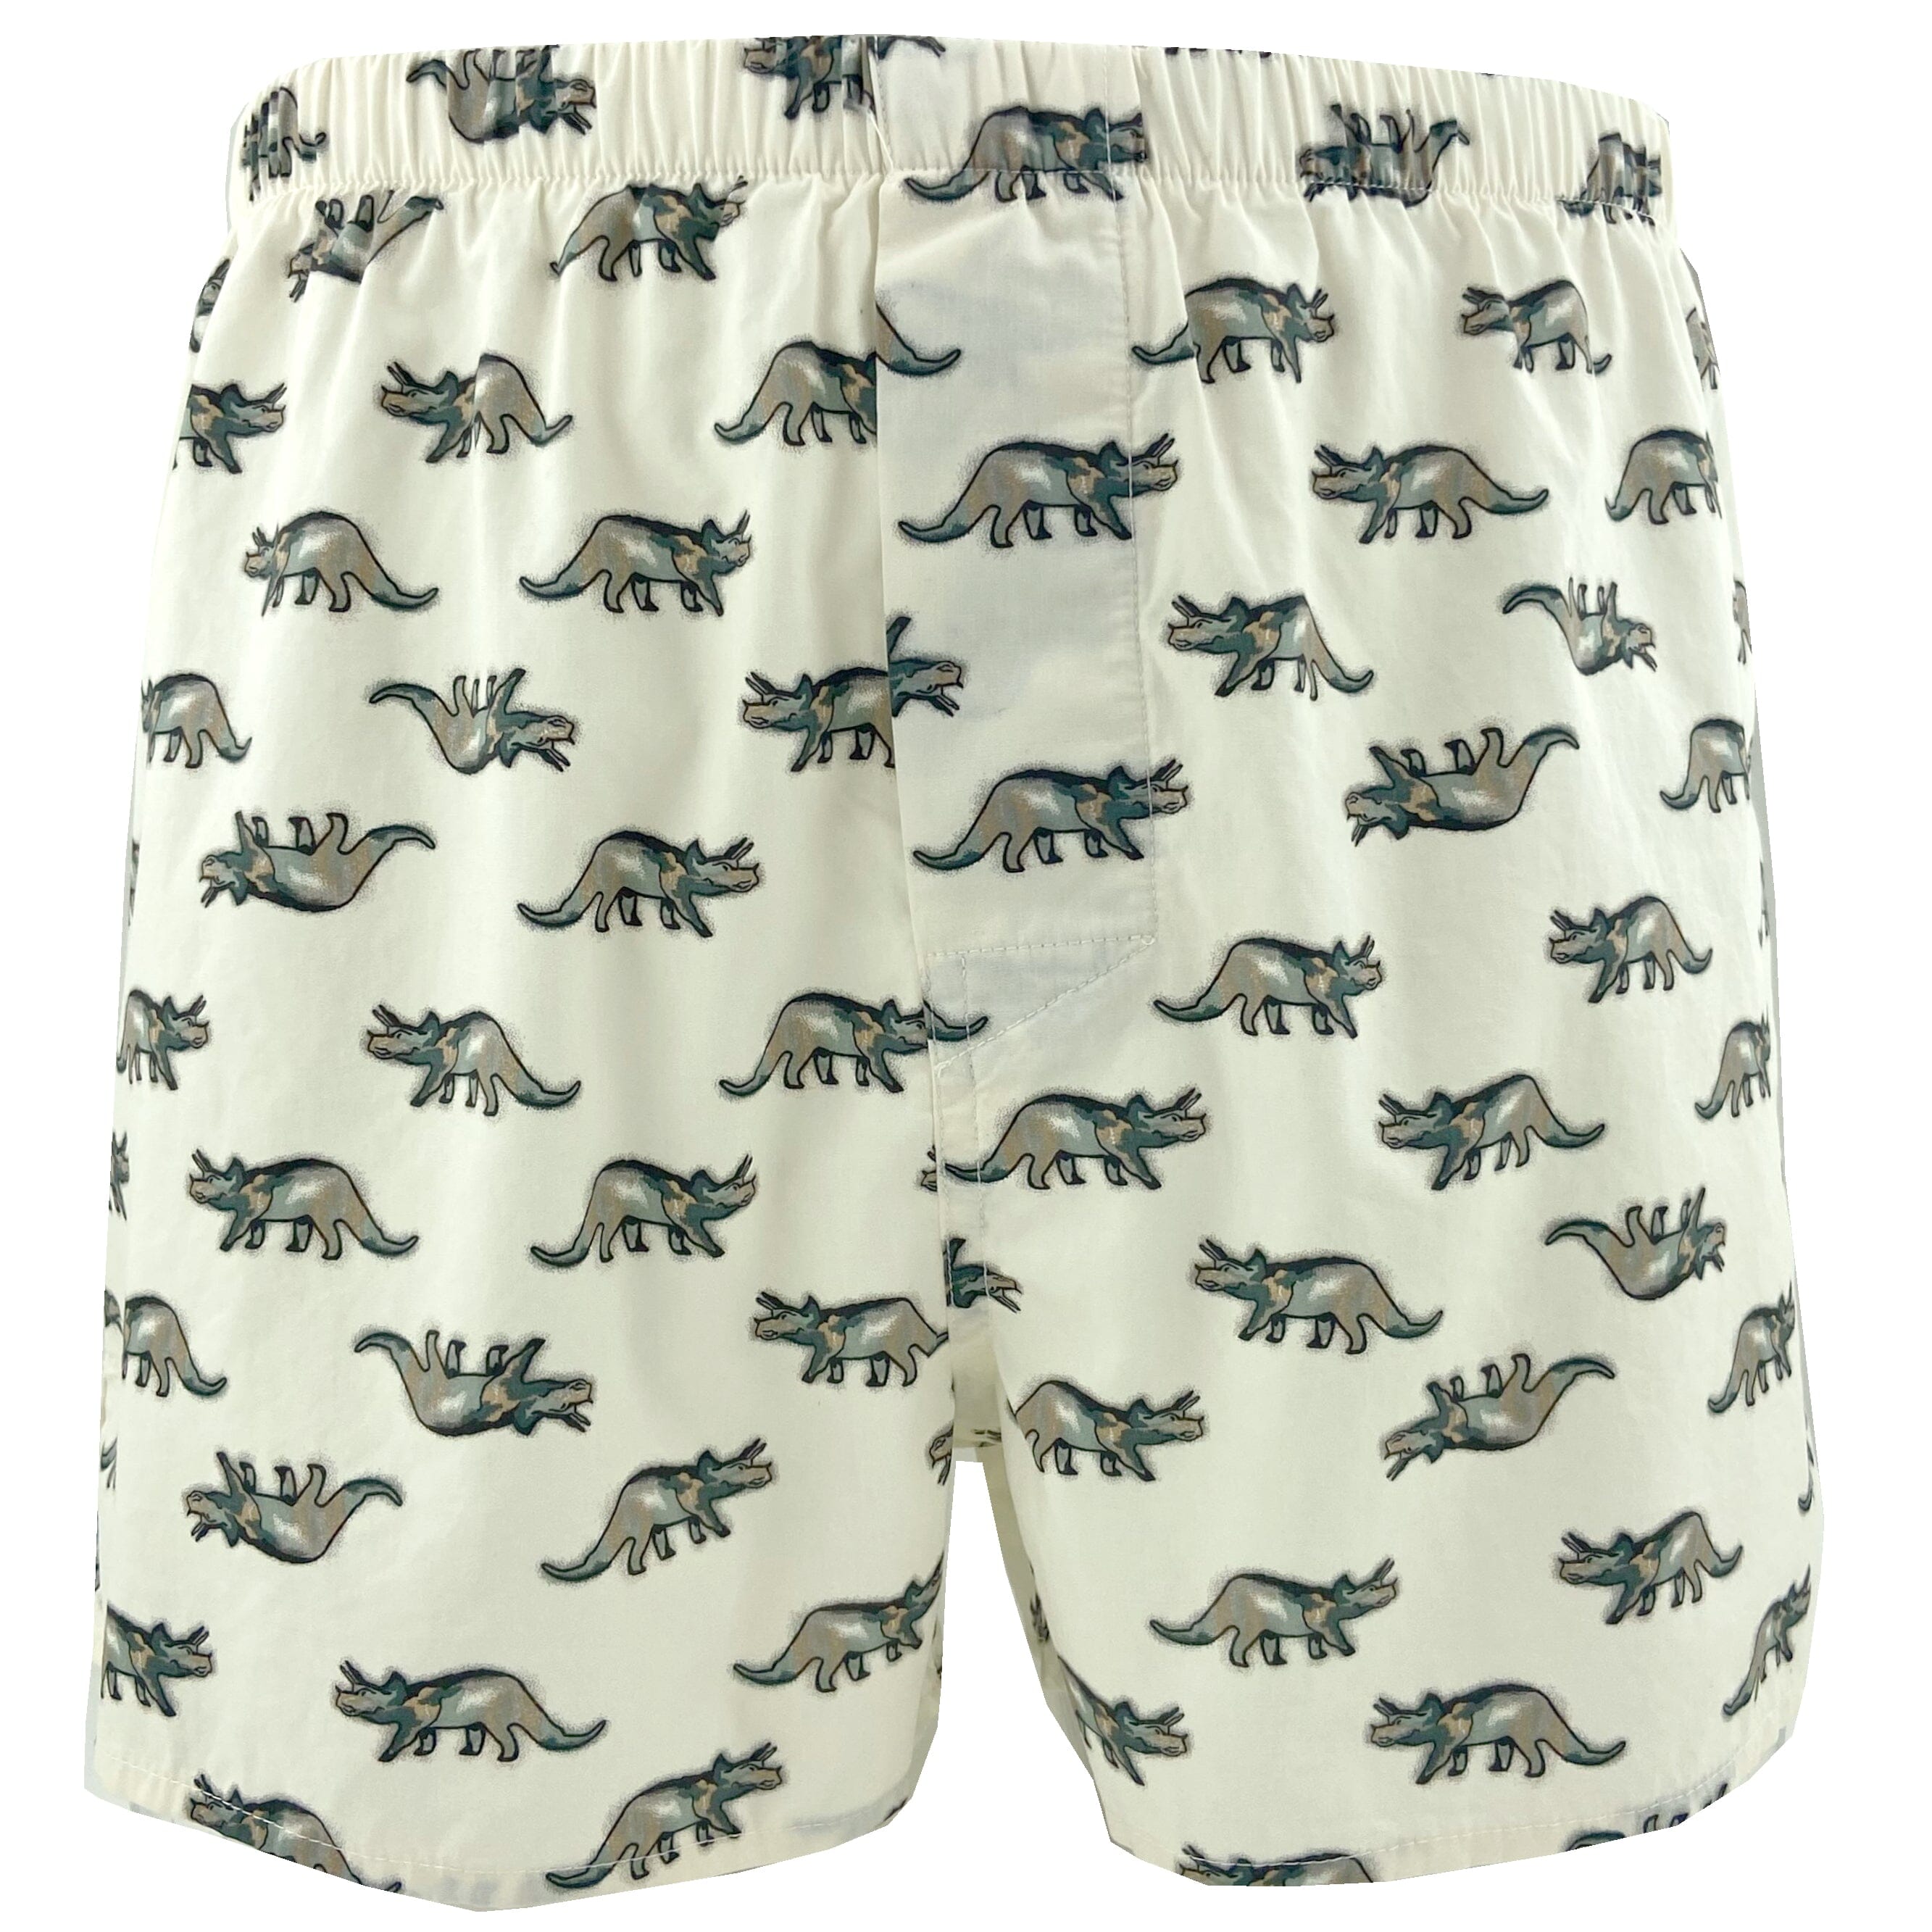 Men's Triceratops Dinosaurs Patterned Cotton Underwear Boxer Shorts